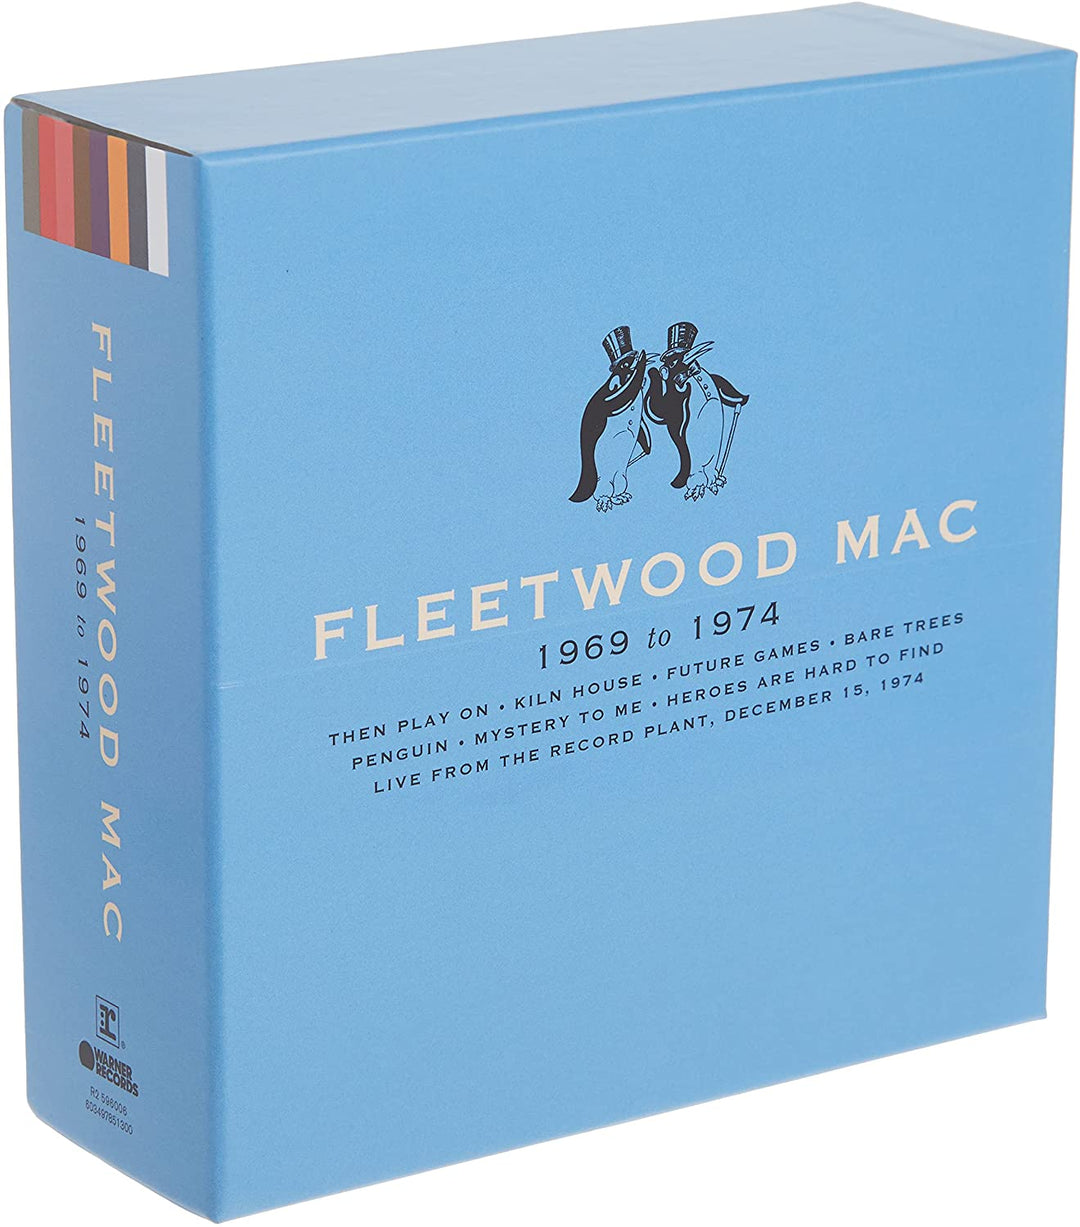 Fleetwood Mac - Fleetwood Mac (1969-1974) [Audio-CD]